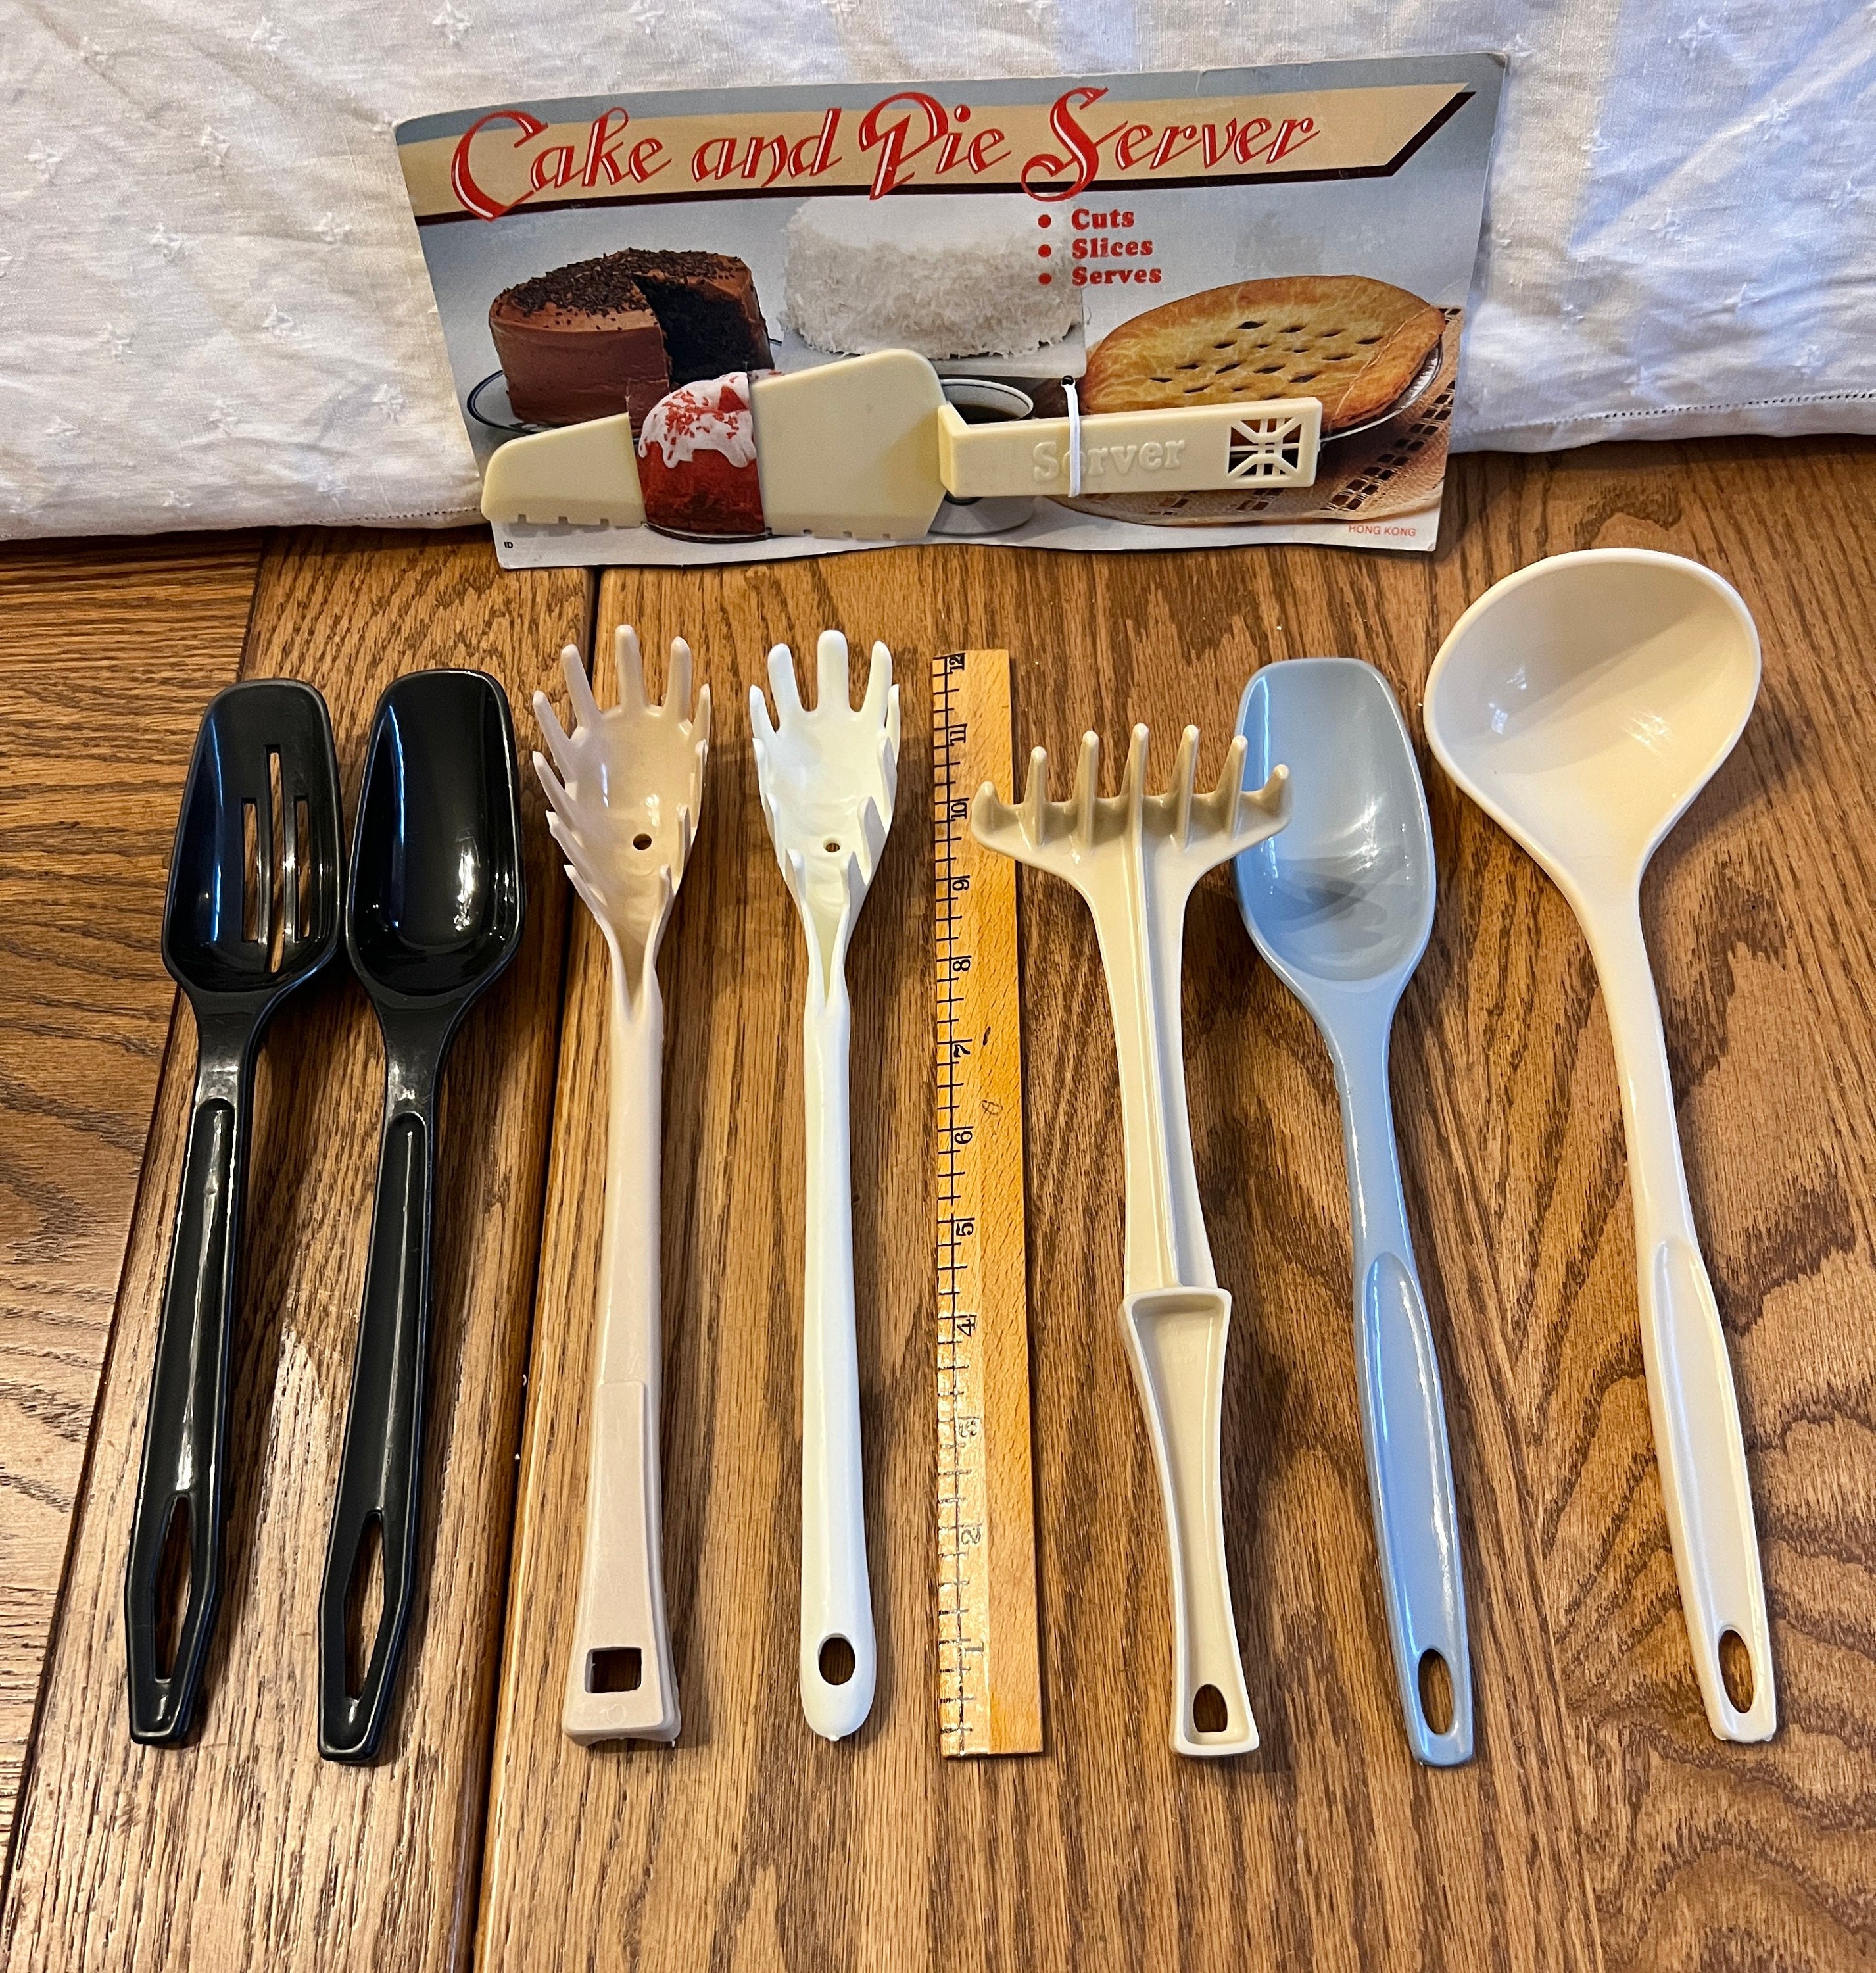 5 Vintage Plastic Kitchen Utensils, Spoon, Ice Cream Scoop, Measuring  Spoons, Bohemian Decor 